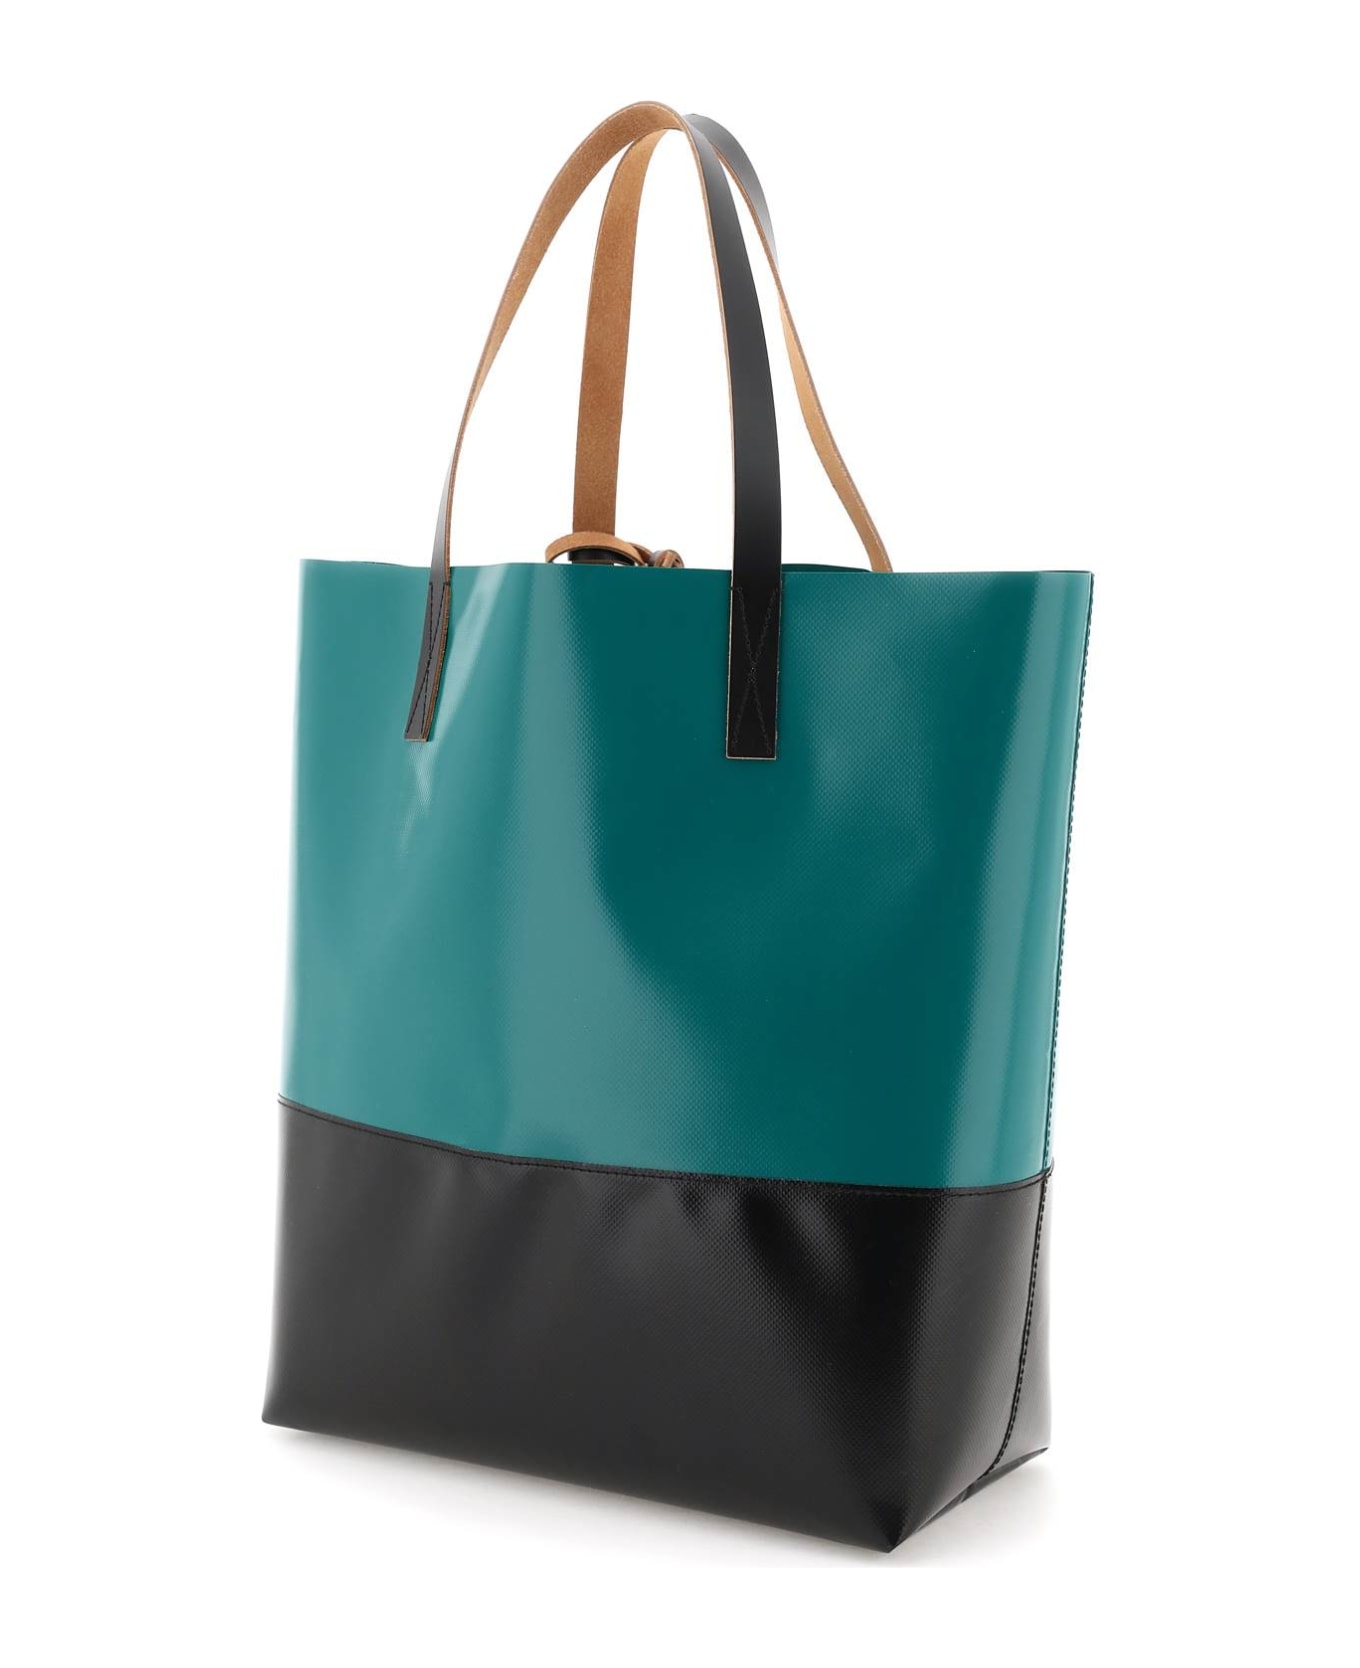 Marni Two Tone Tribeca Shopping Bag - Green